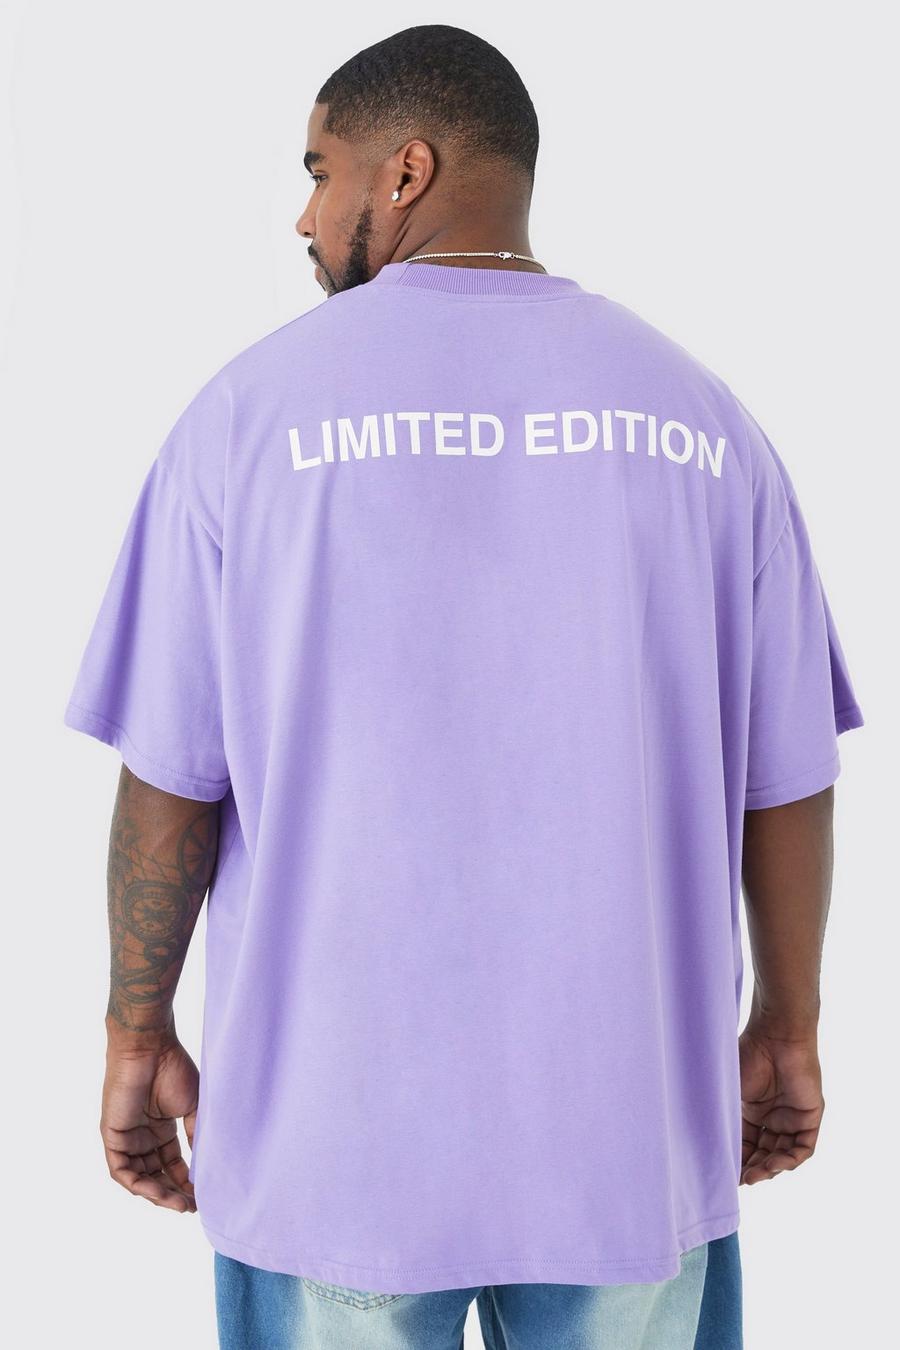 Plus Oversize Limited T-Shirt, Lilac purple